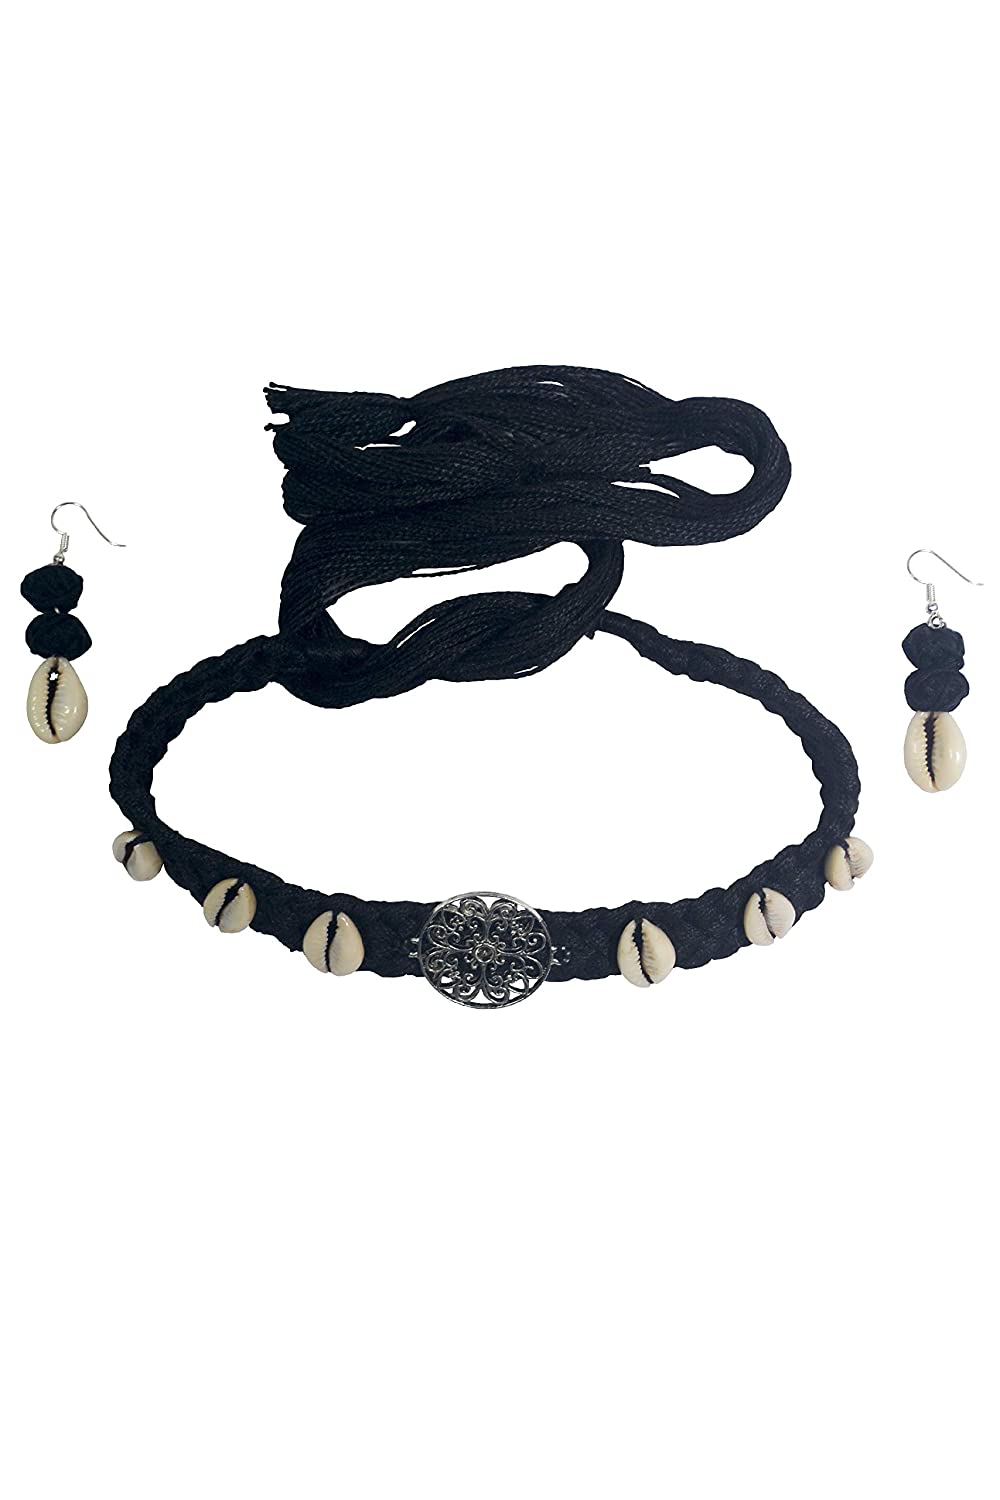 Oxidized Kaudi Black Choker Necklace For Women And Girls 01